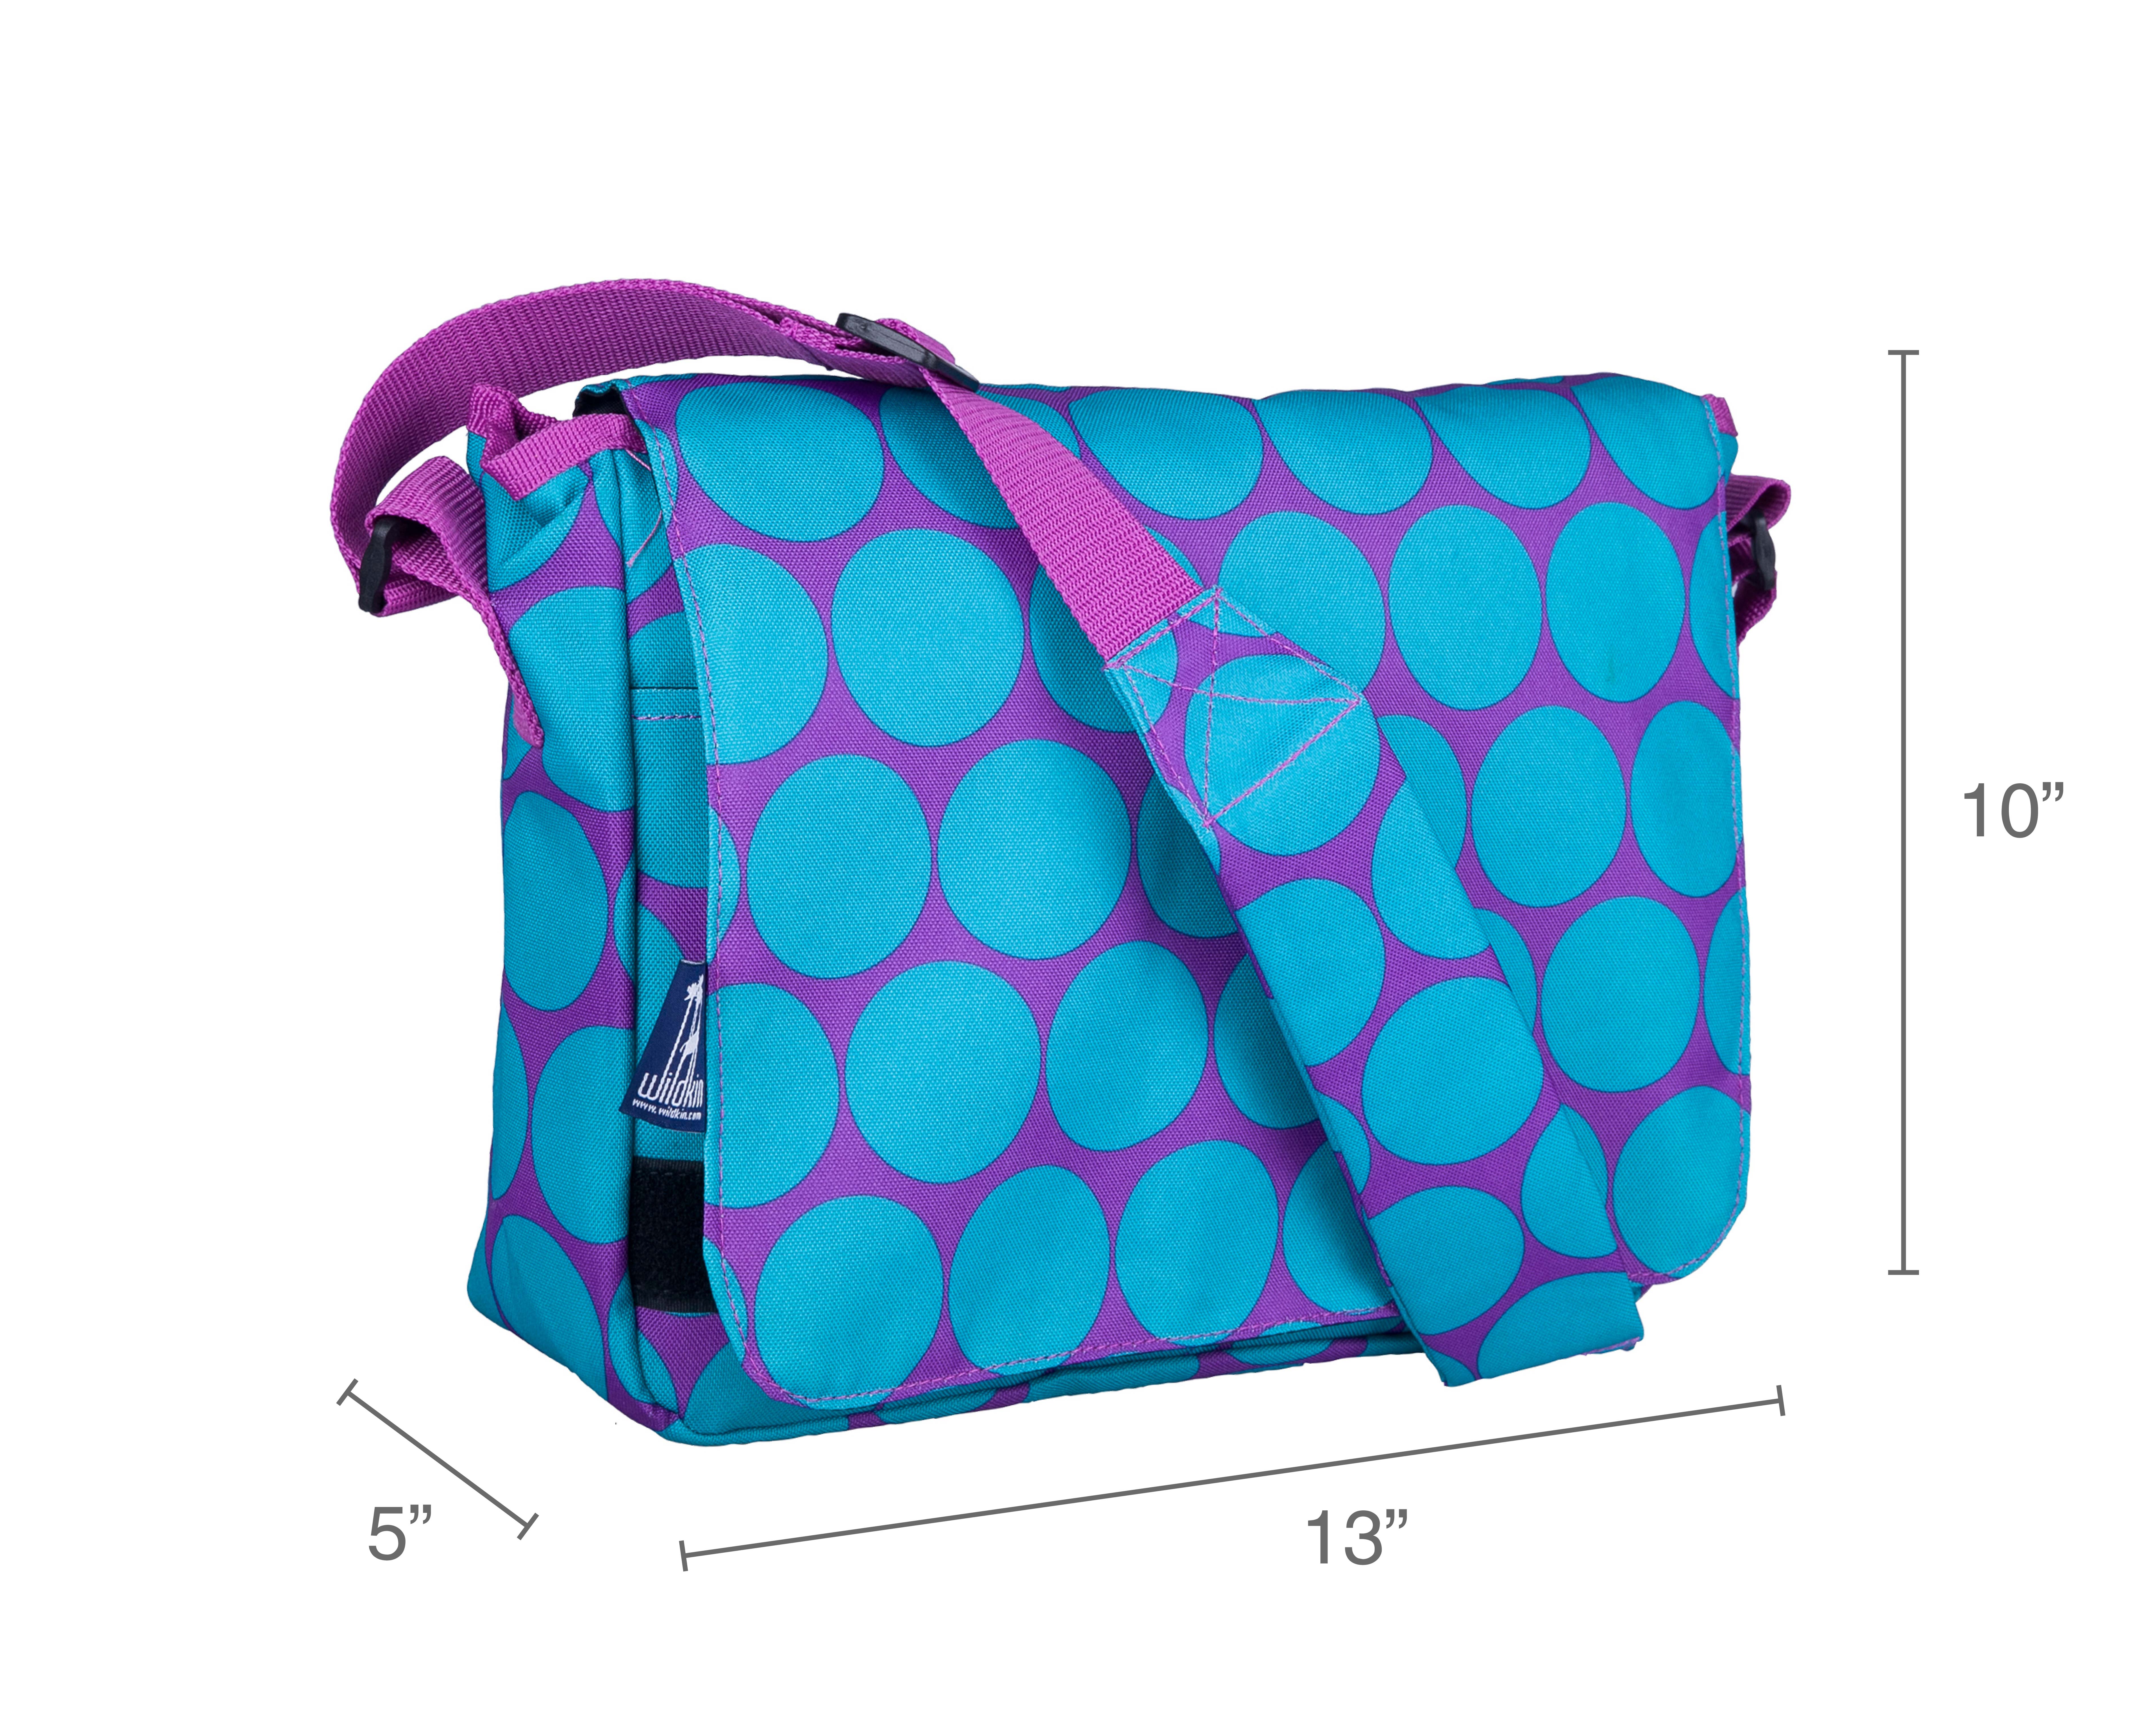 Wildkin Kids Messenger Bag for Girls, Perfect for School or Travel, 13 Inch (Big Dot Aqua) - image 5 of 7